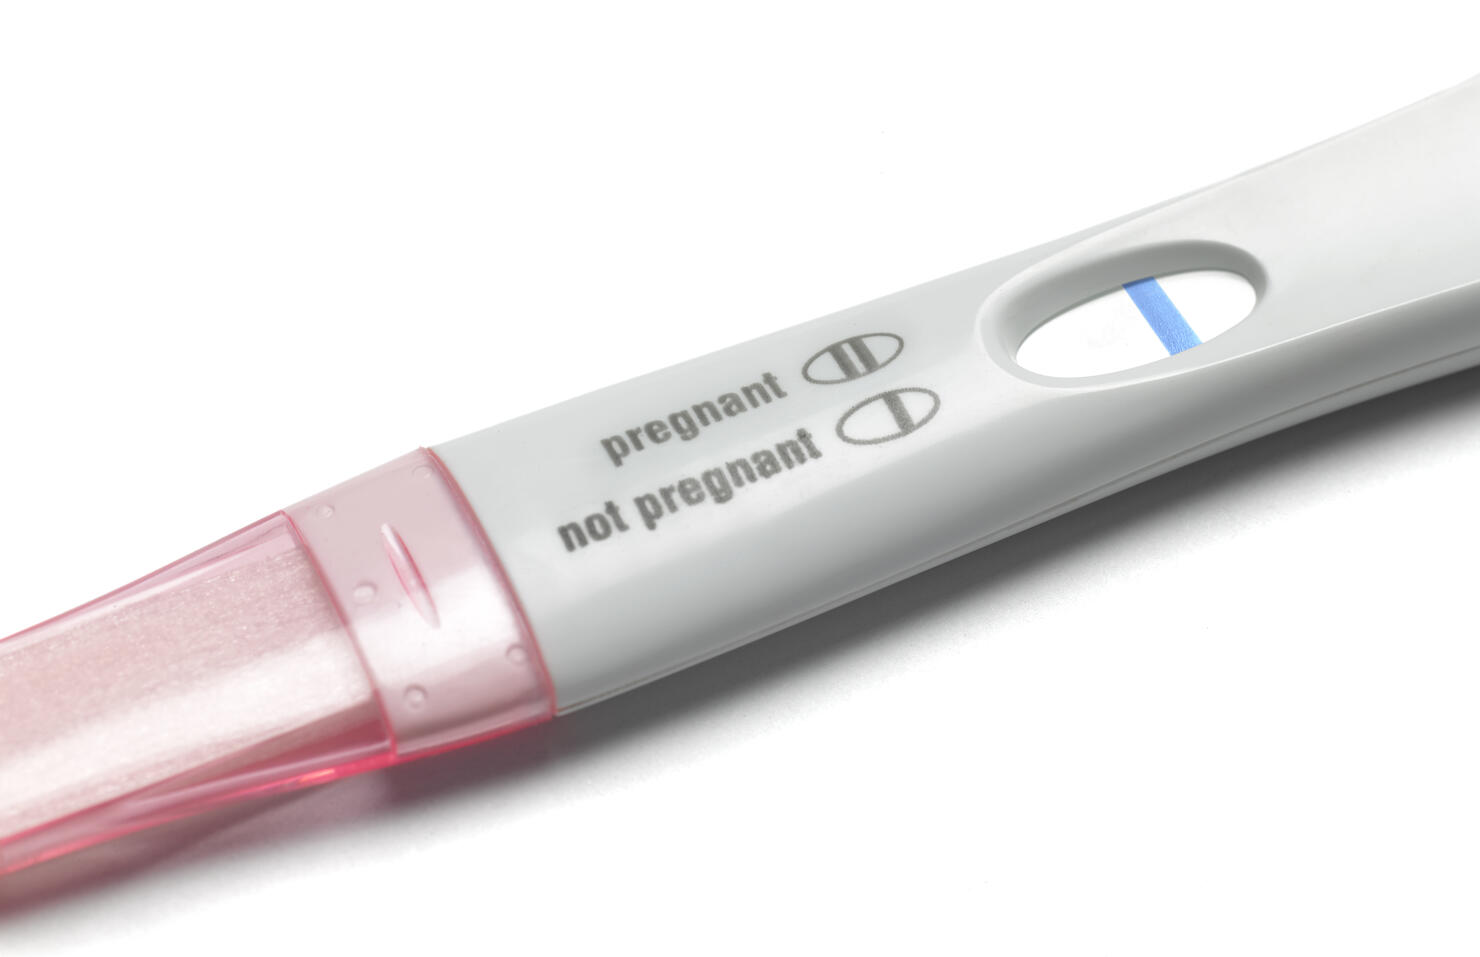 Pregnancy test not pregnant